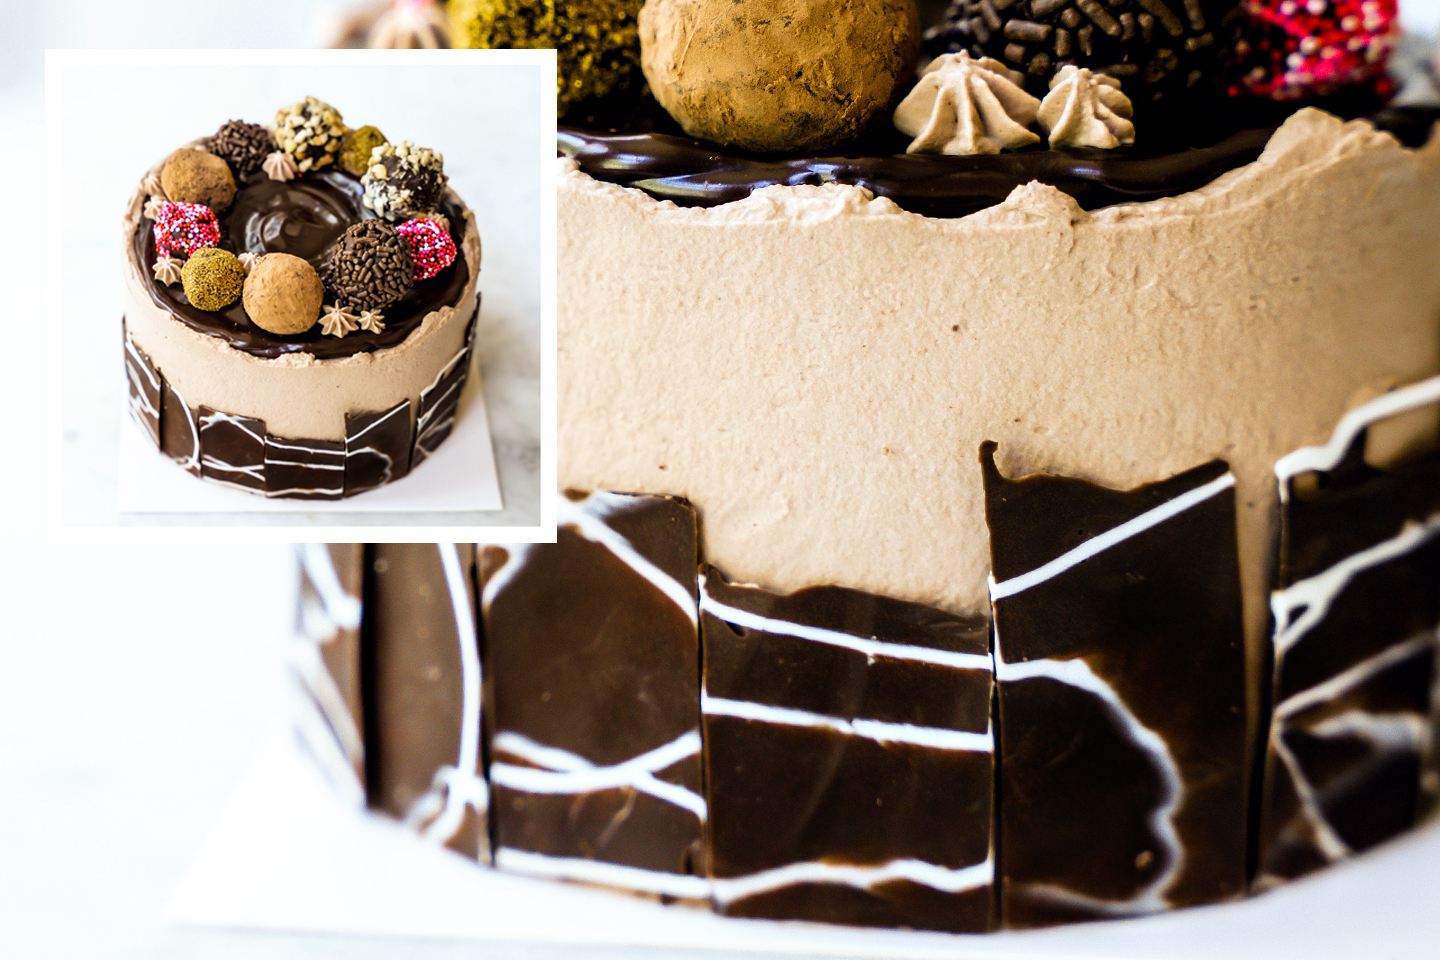 Easy Chocolate Bark Garnish – No tempering needed!